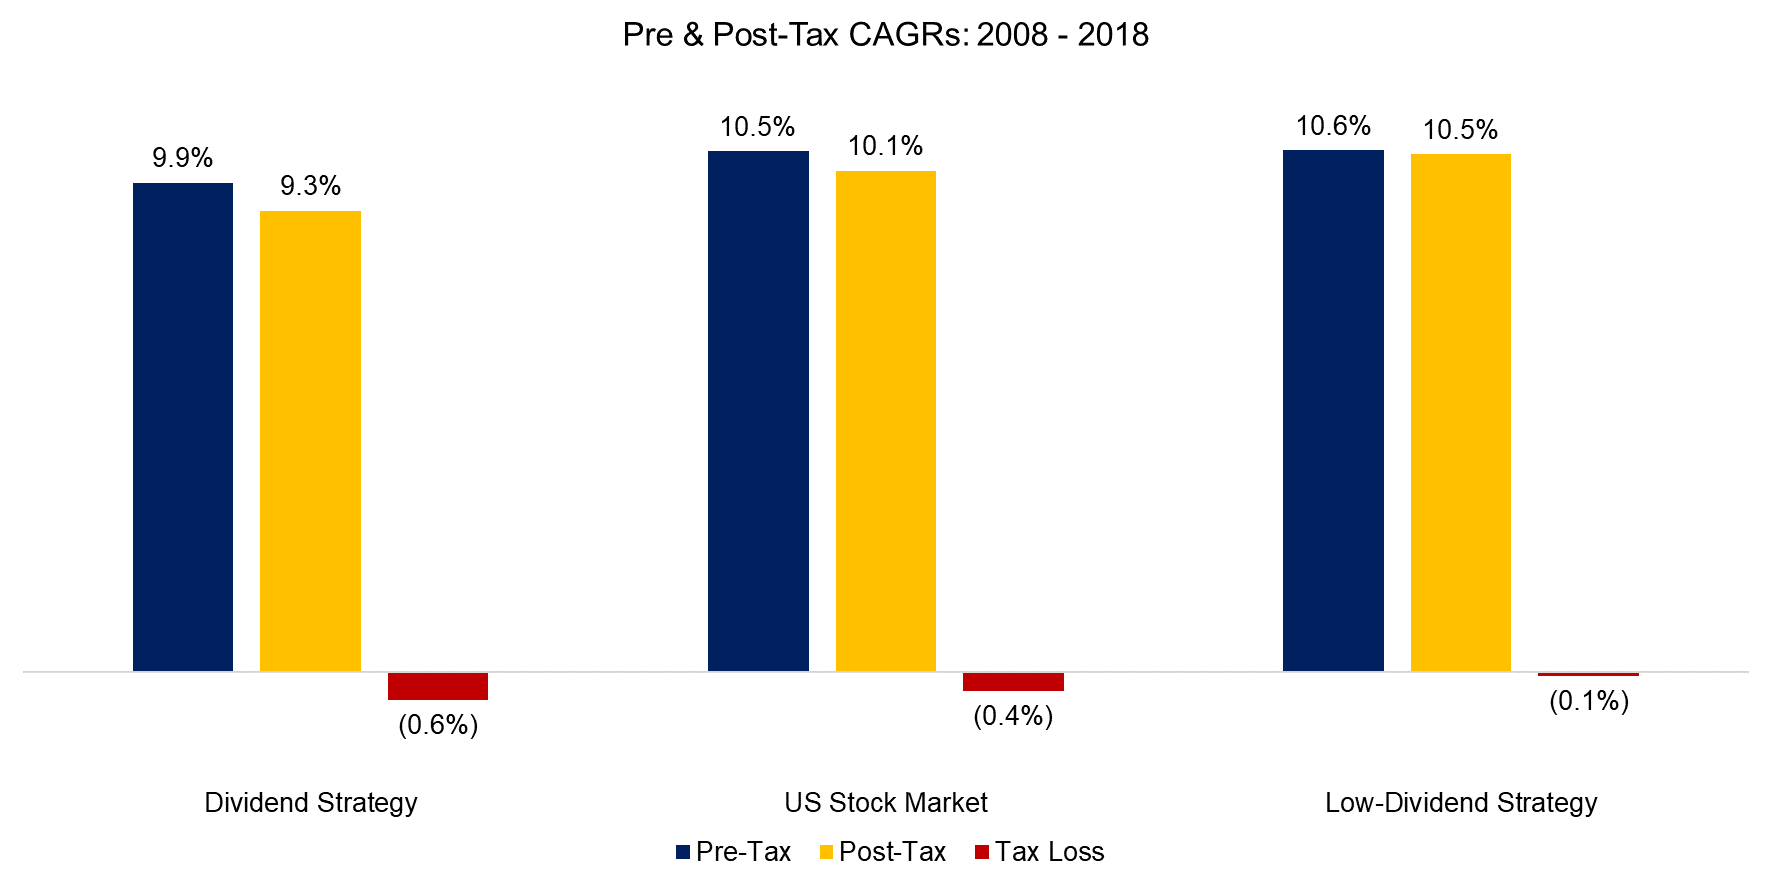 Pre & Post-Tax CAGRs 2008 - 2018